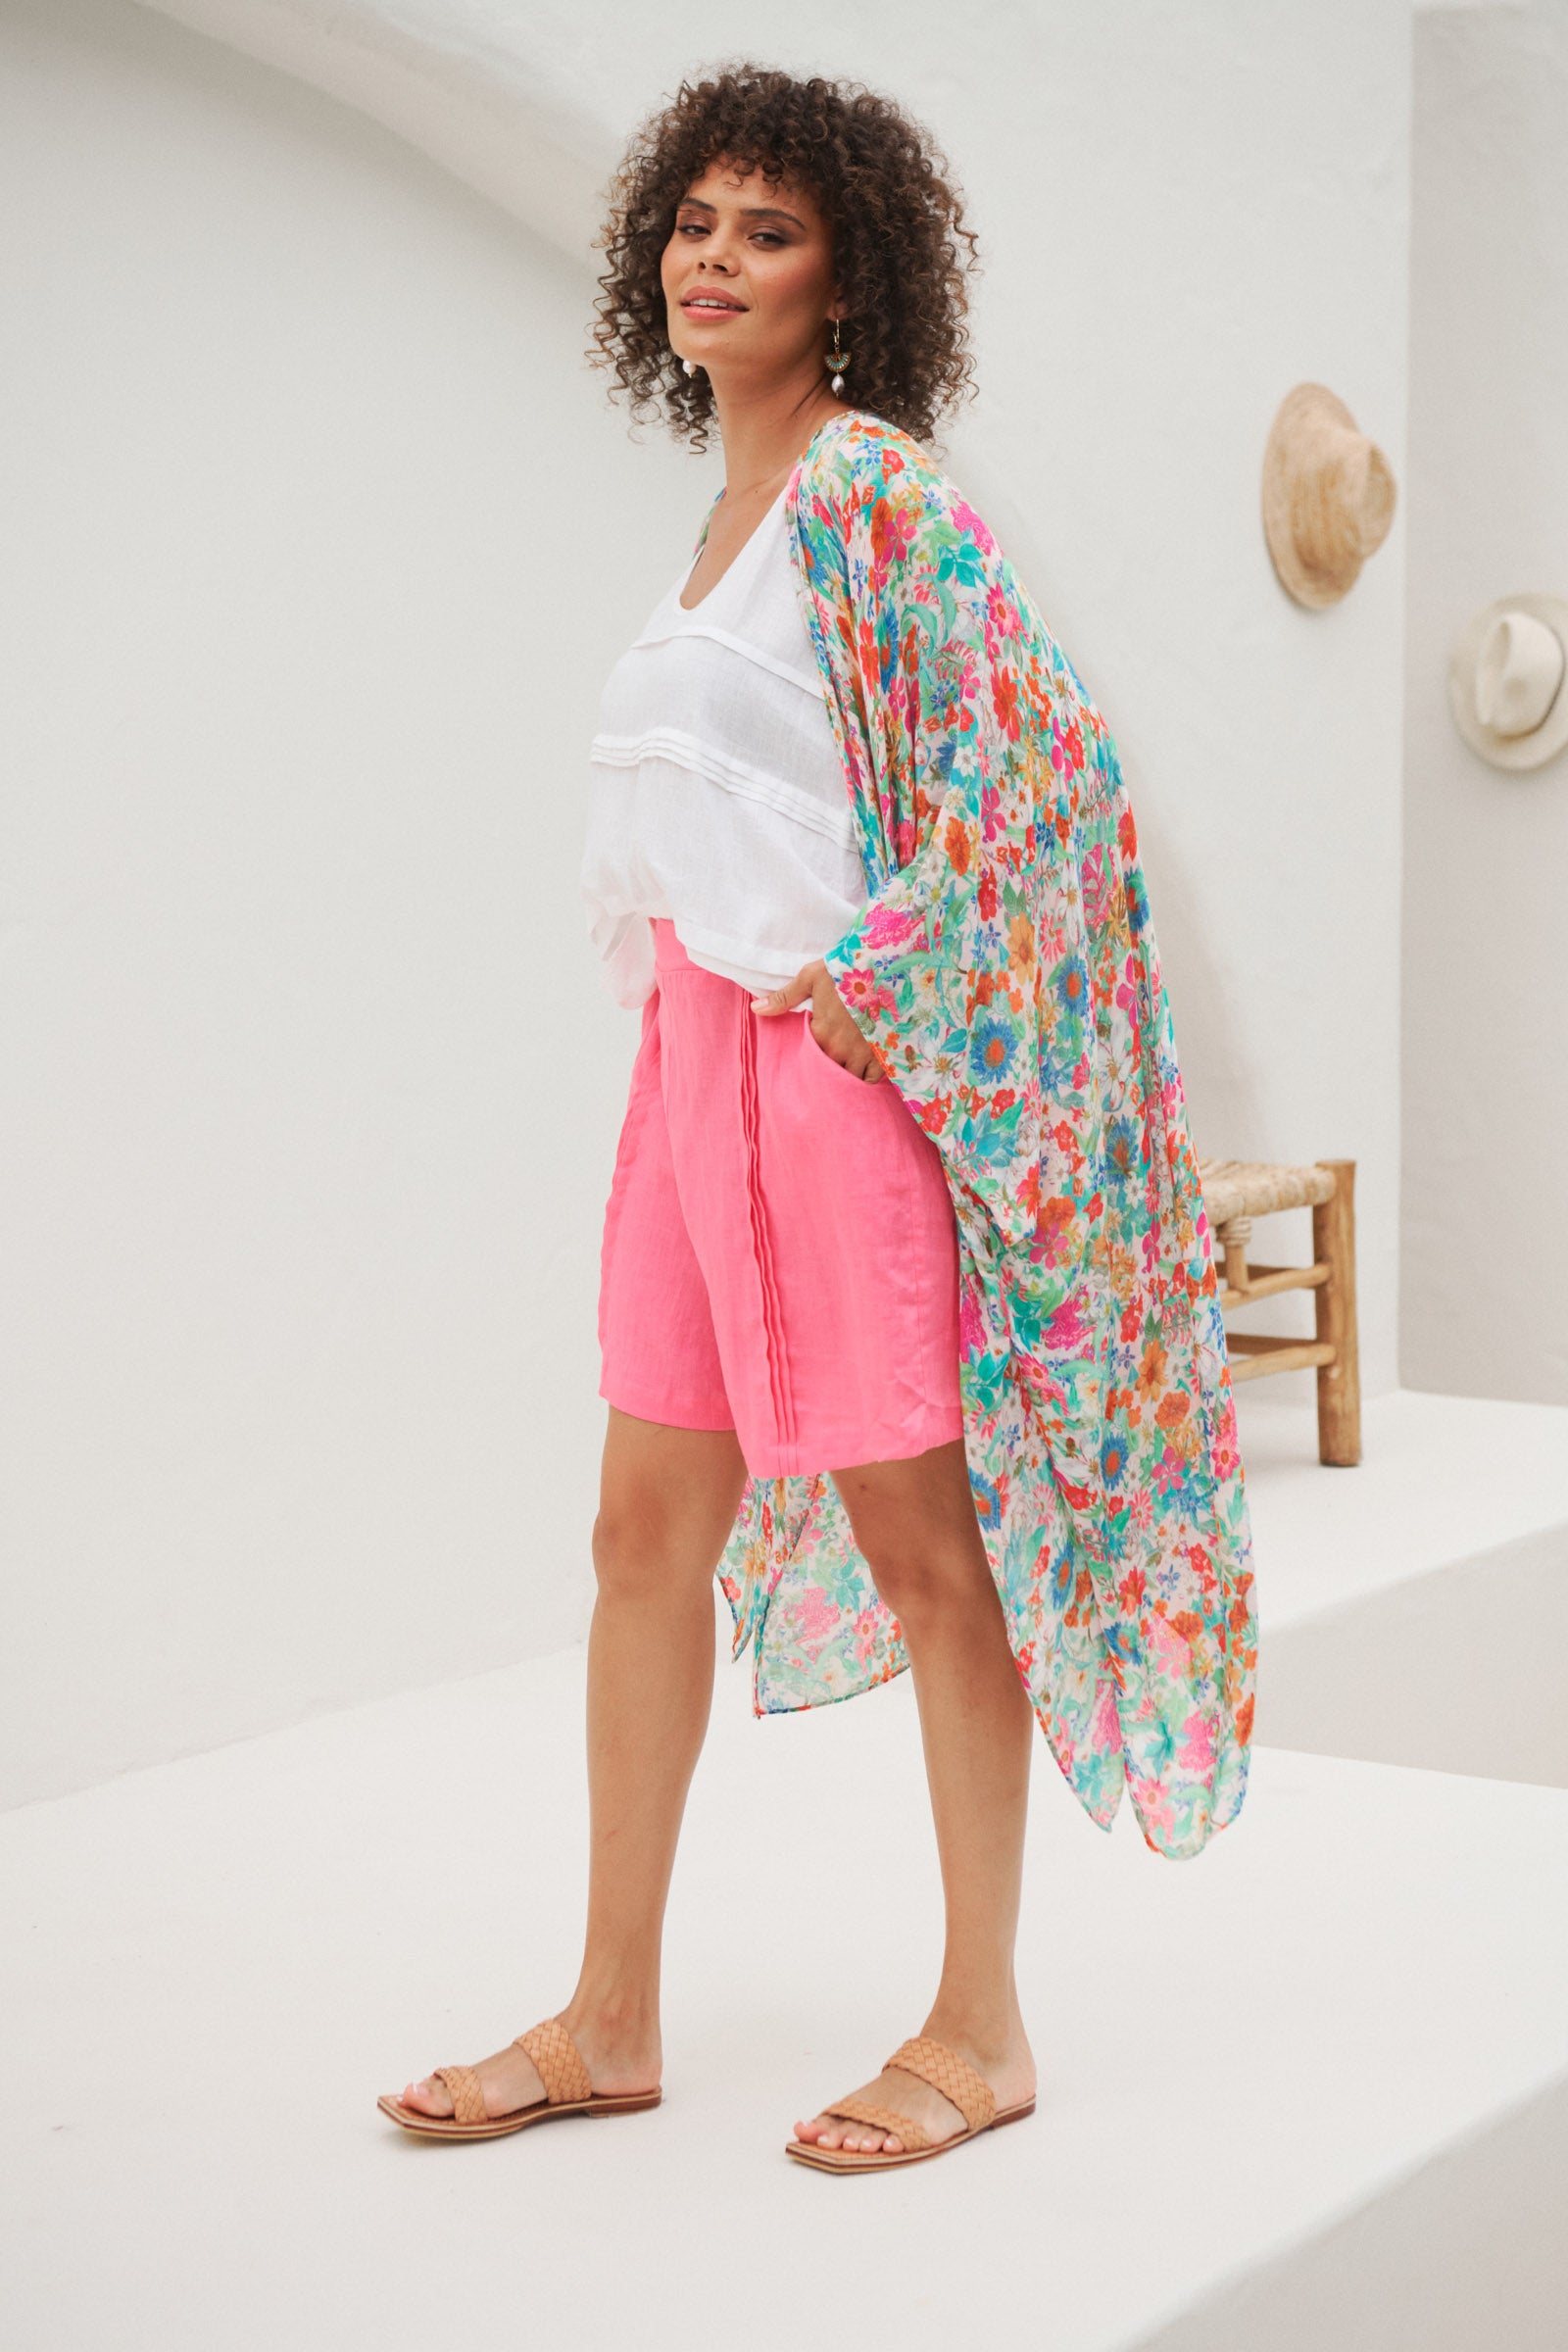 Esprit Cape - Pink Flourish - eb&ive Clothing - Kimono Cape Long One Size